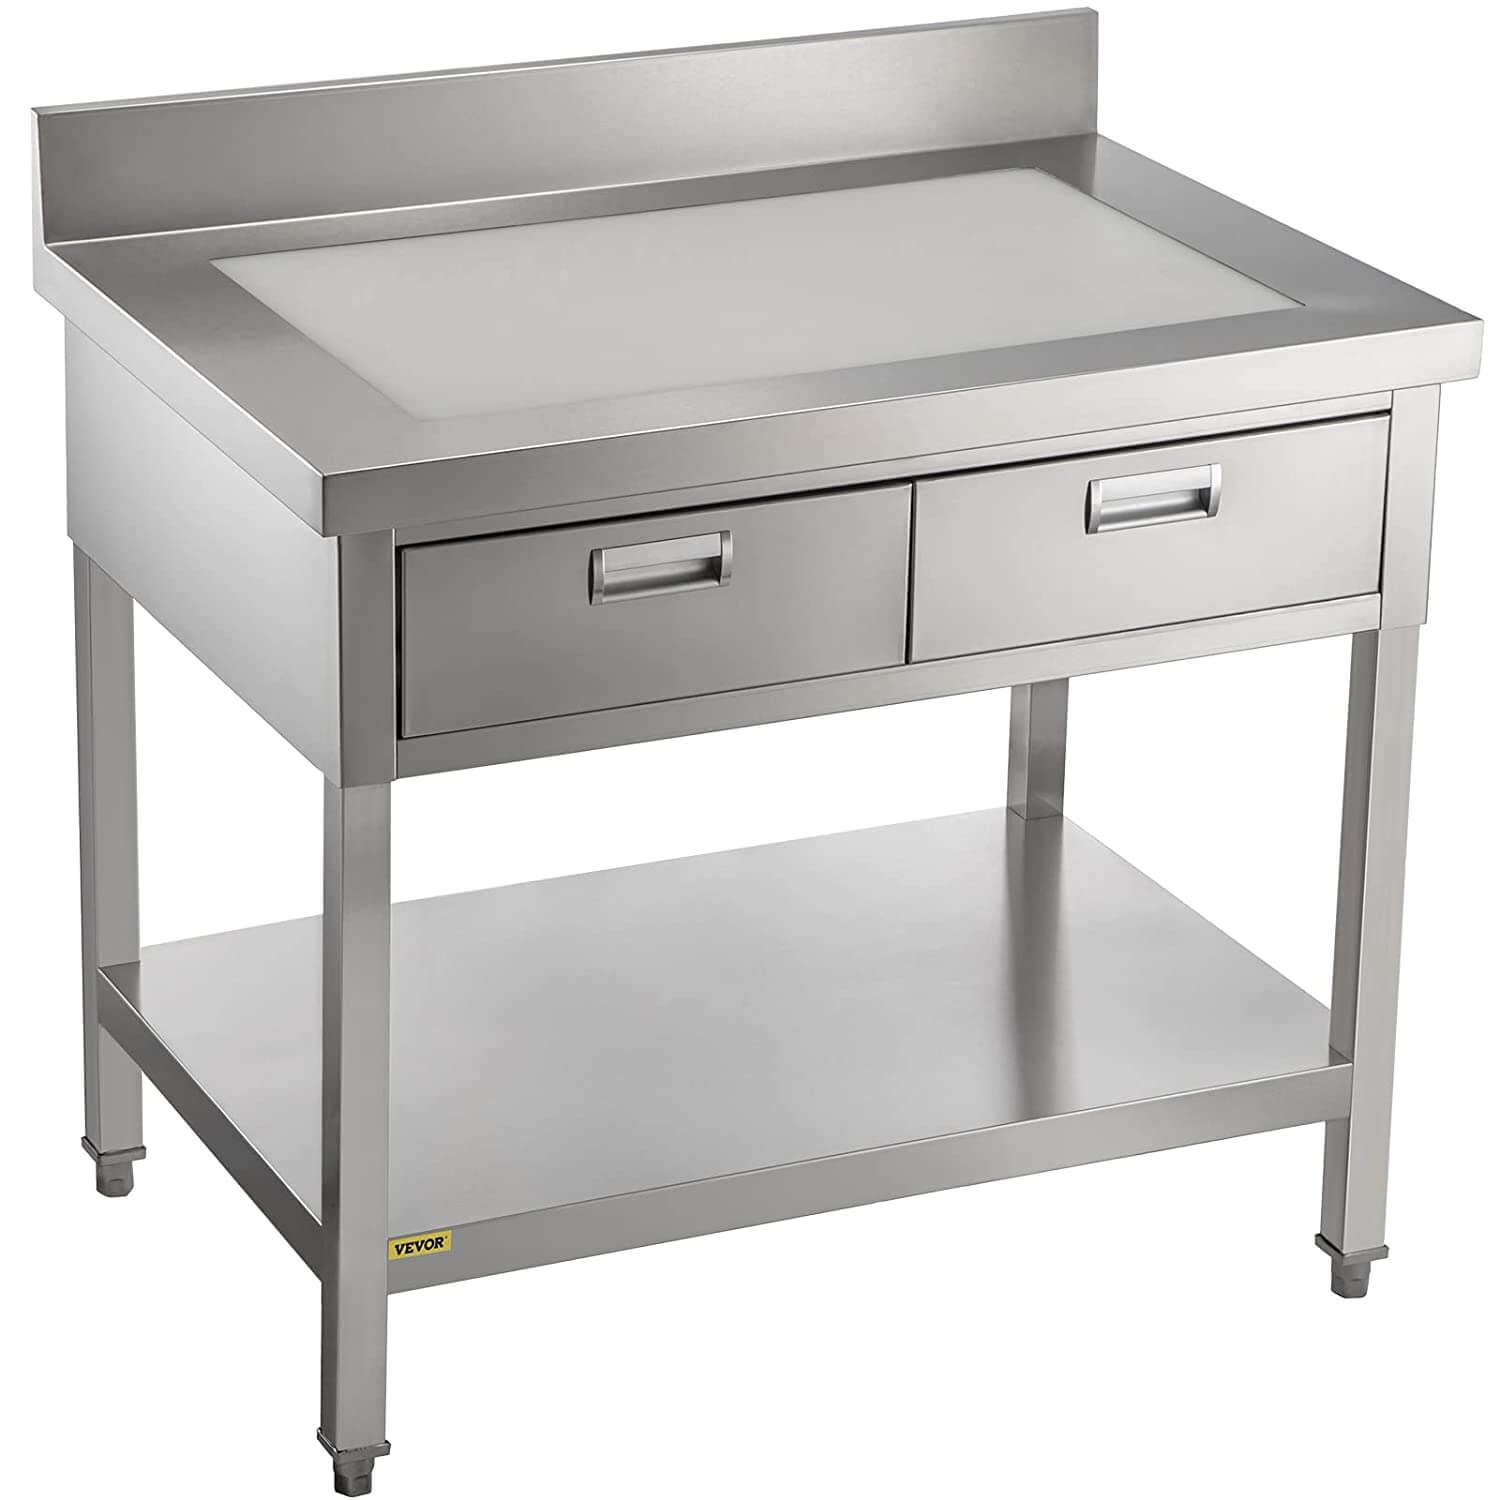 VEVOR’s portable Stainless Steel Commercial kitchen prep table